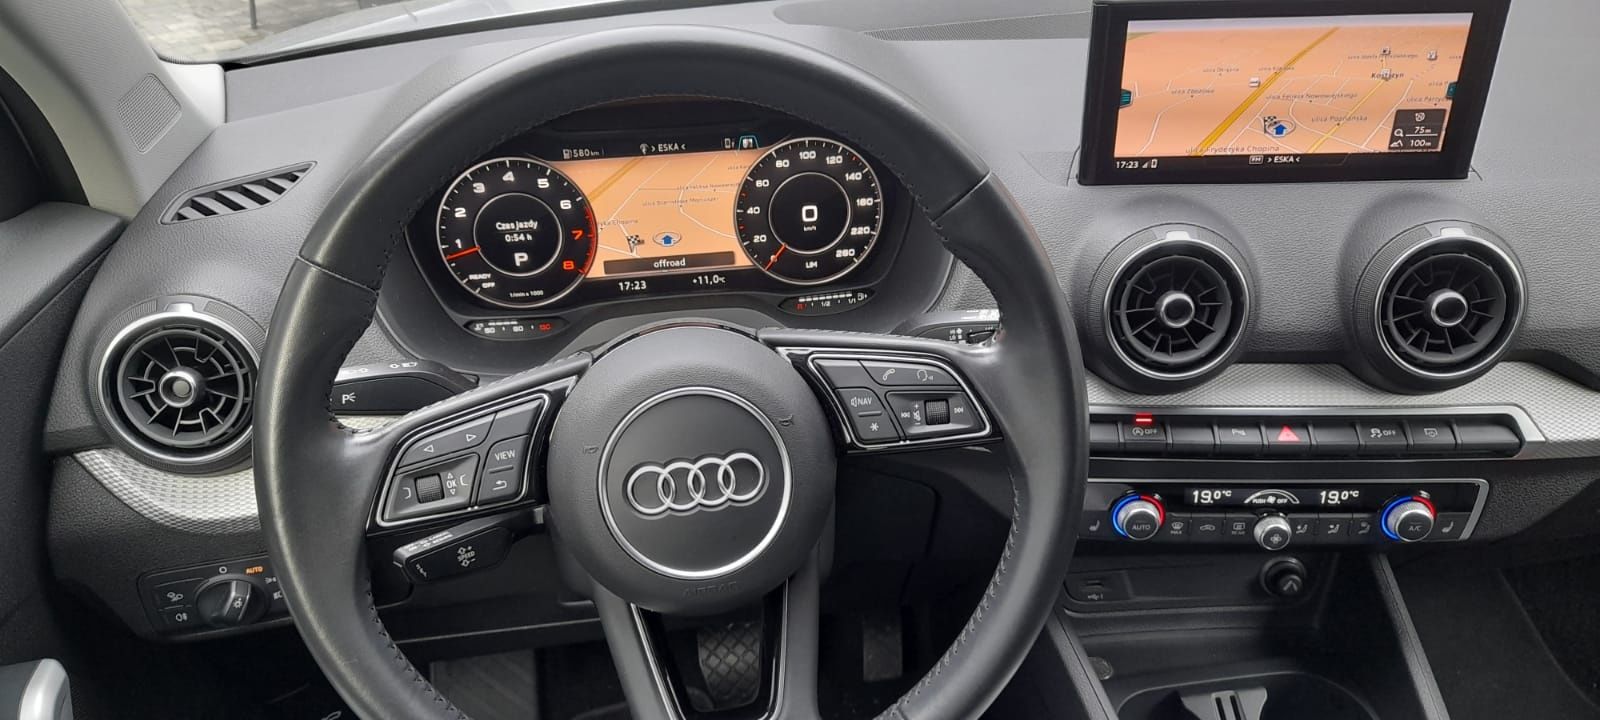 Audi Q2 2019 Polski Salon Zadbana!